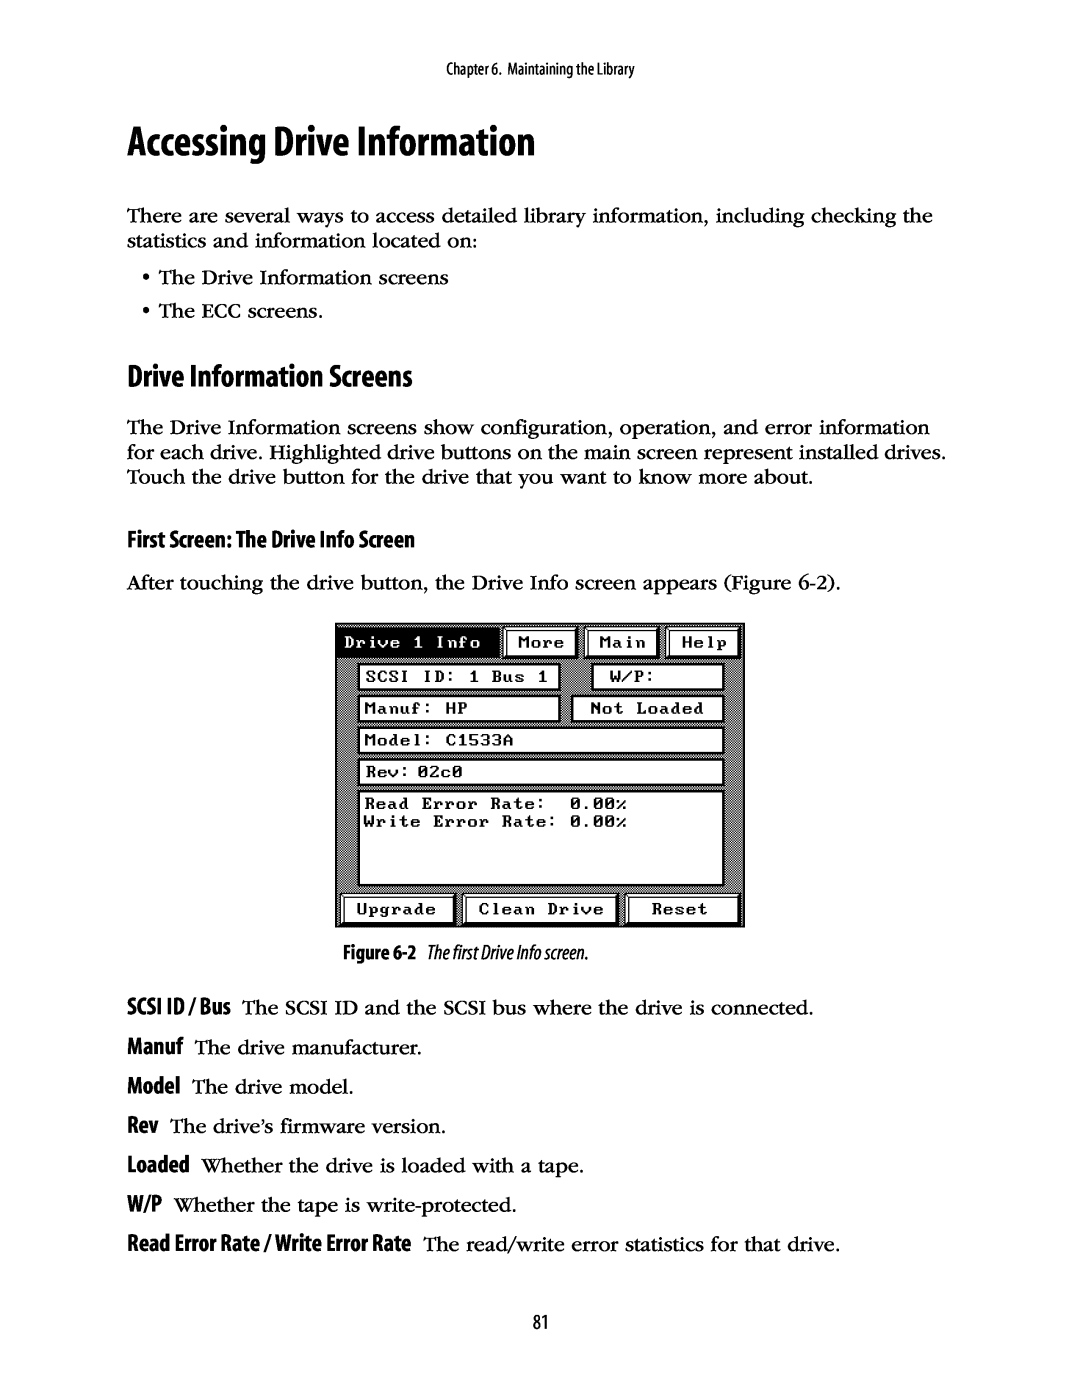 Spectra Logic 10000 manual Accessing Drive Information, Drive Information Screens, First Screen The Drive Info Screen 